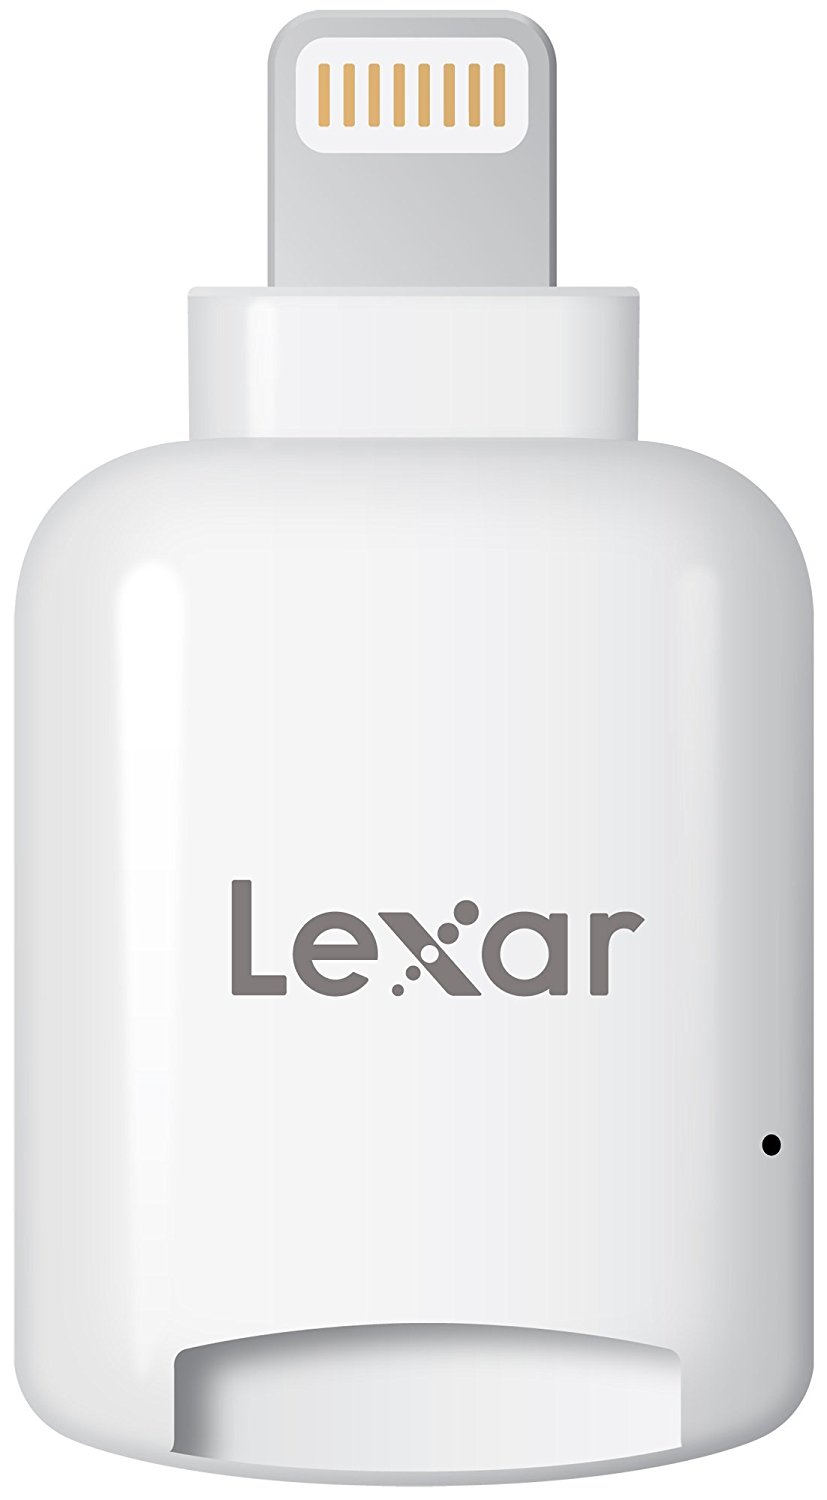 Lexar microSD to Lightning Reader is 40% Off [Deal]